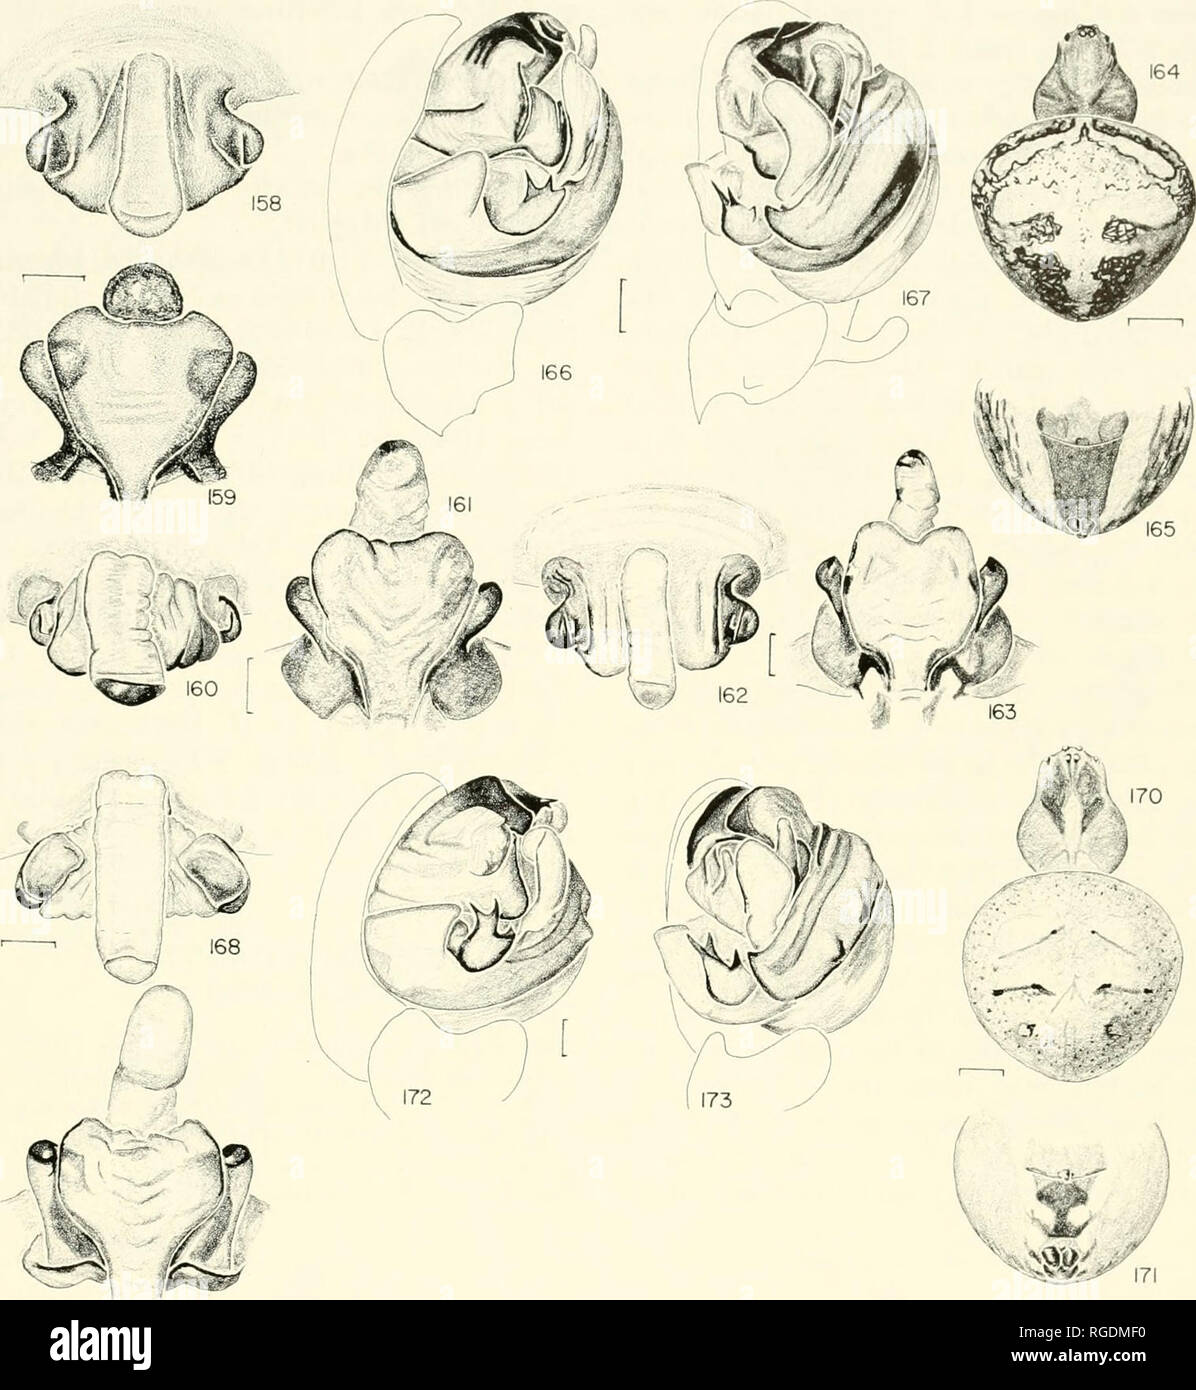 . Bulletin of the Museum of Comparative Zoology at Harvard College. Zoology. Neotropical Araneus, Dubiepeira, Aculepeira • Levi 225. H 169 Figures 158-167. Araneus meropes (Keyserling). 158-165. Female. 158,160,162. Epigynum, ventral. 159,161,163. Epigynum, posterior. 158, 159 (Torontoy, Dpto. Cusco, Peru). 160, 161 (Dpto. Magdalena, Colombia). 162, 163 (Machupicchu, Cusco, Peru). 164. Dorsal. 165. Abdomen, ventral. 166, 167. Male, left palpus. 166. Mesal. 167. Ventral. Figures 168-173. A. koepckeorum n. sp. 168-171. Female. 168. Epigynum, ventral. 169. Epigynum, posterior. 170. Dorsal. 171. A Stock Photo